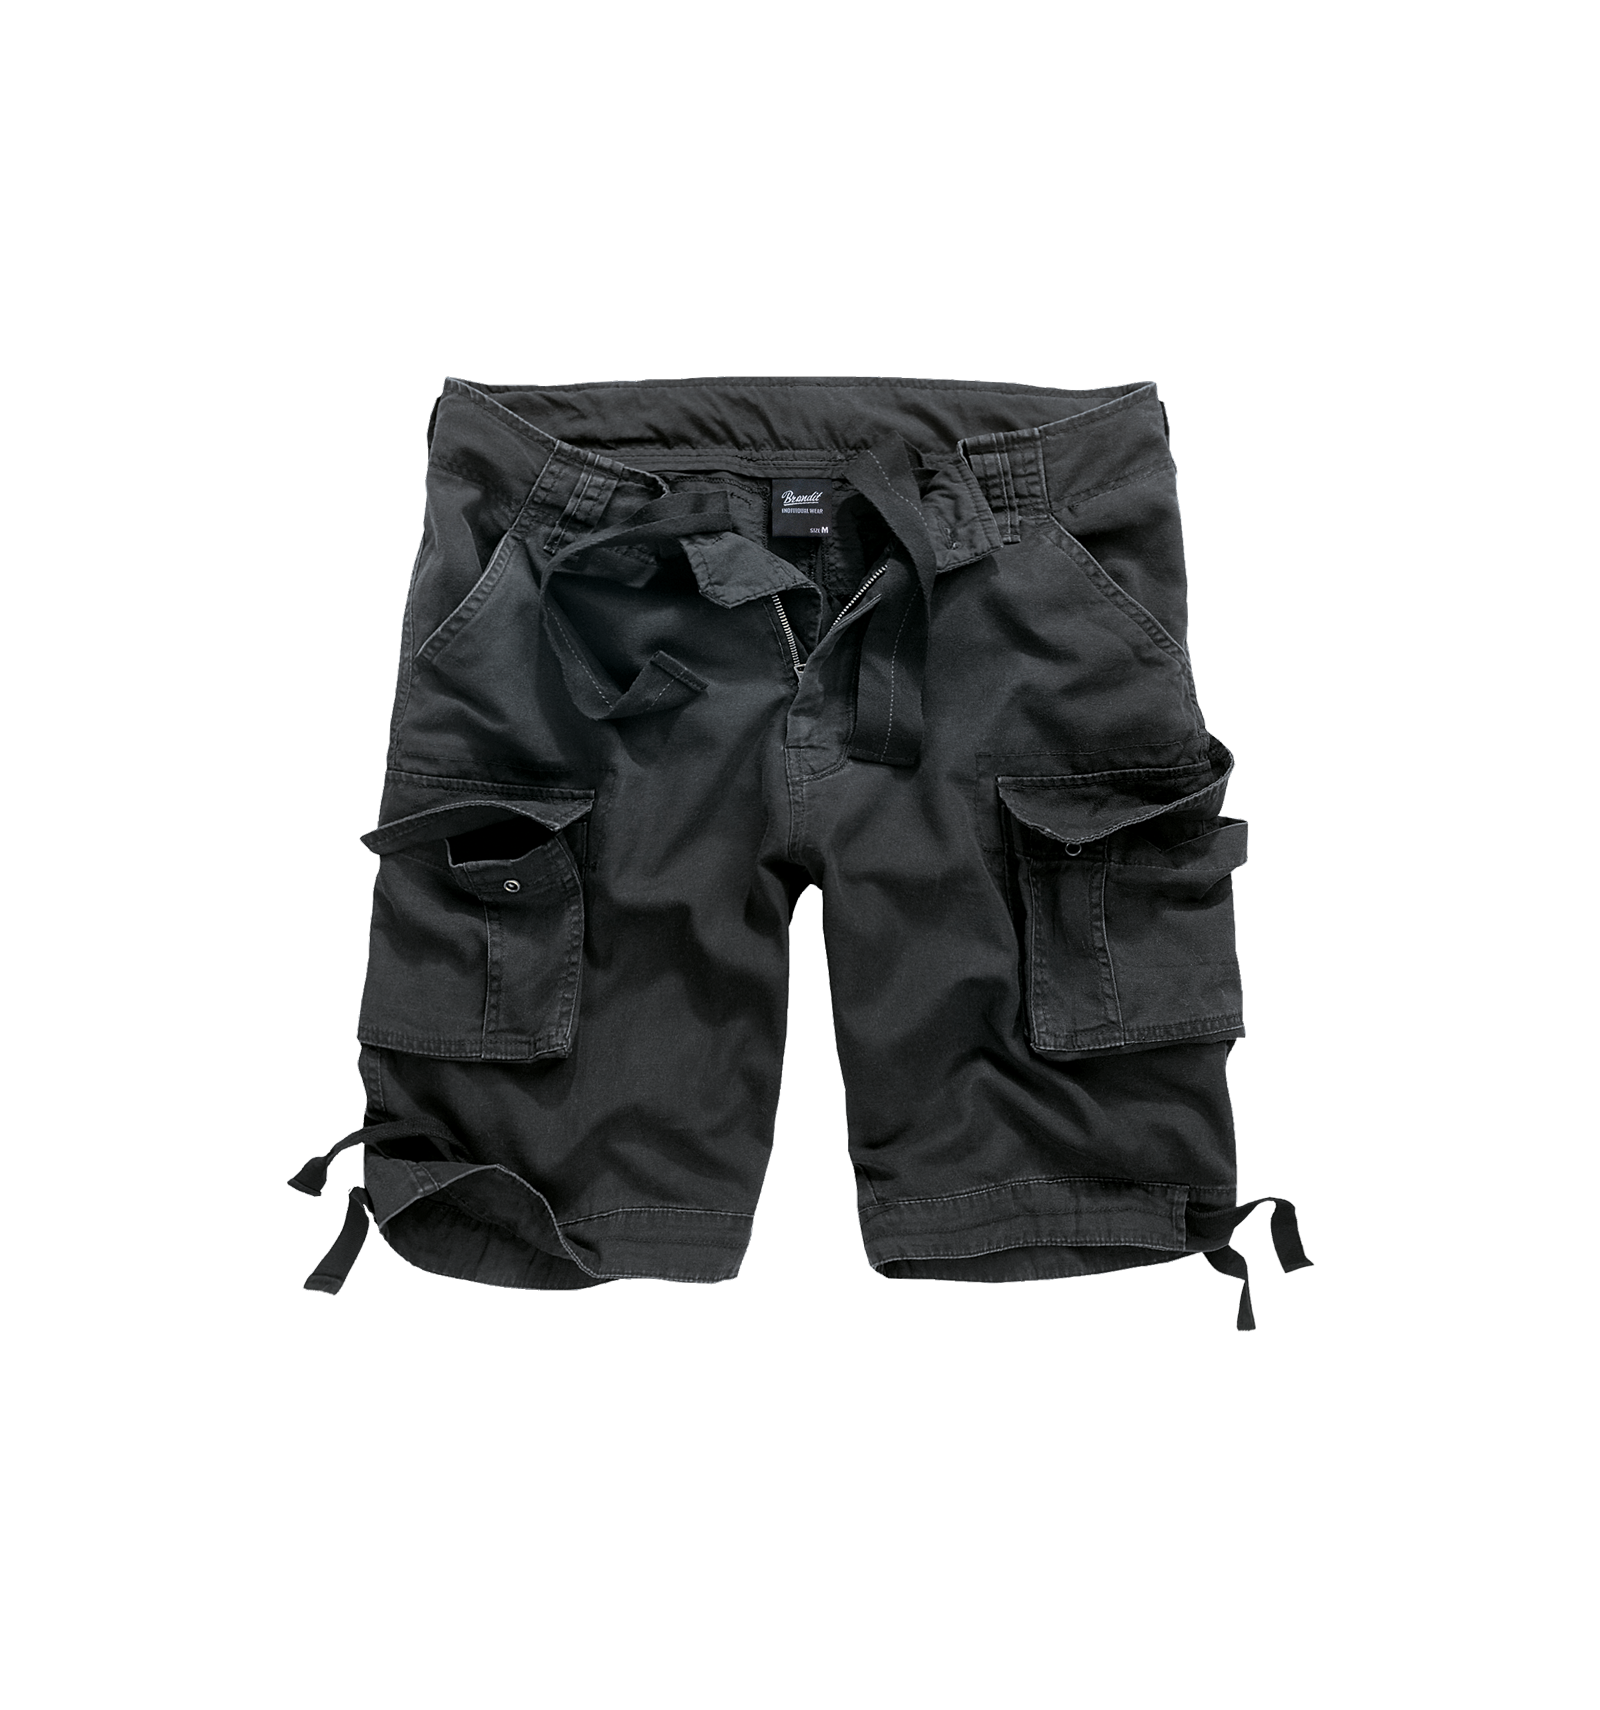 Pantalón corto militar hombre Camuflaje oscuro, vintage grueso - Gothic-Zone